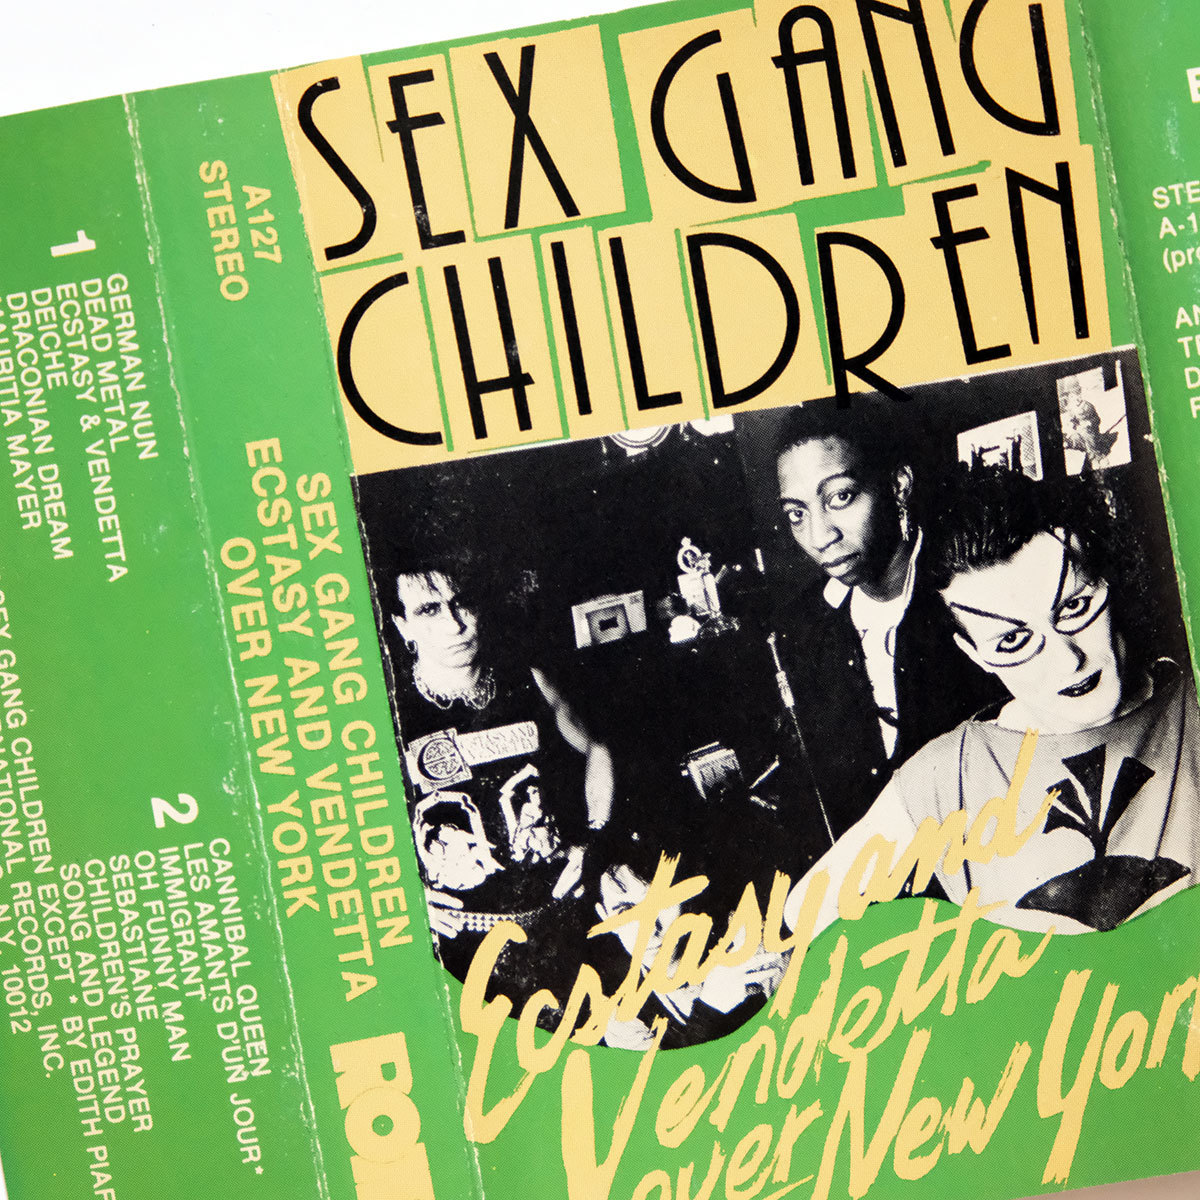 {US версия кассетная лента }Sex Gang Children*Ecstacy And Vendetta Over New York* секс gang дети /ROIR